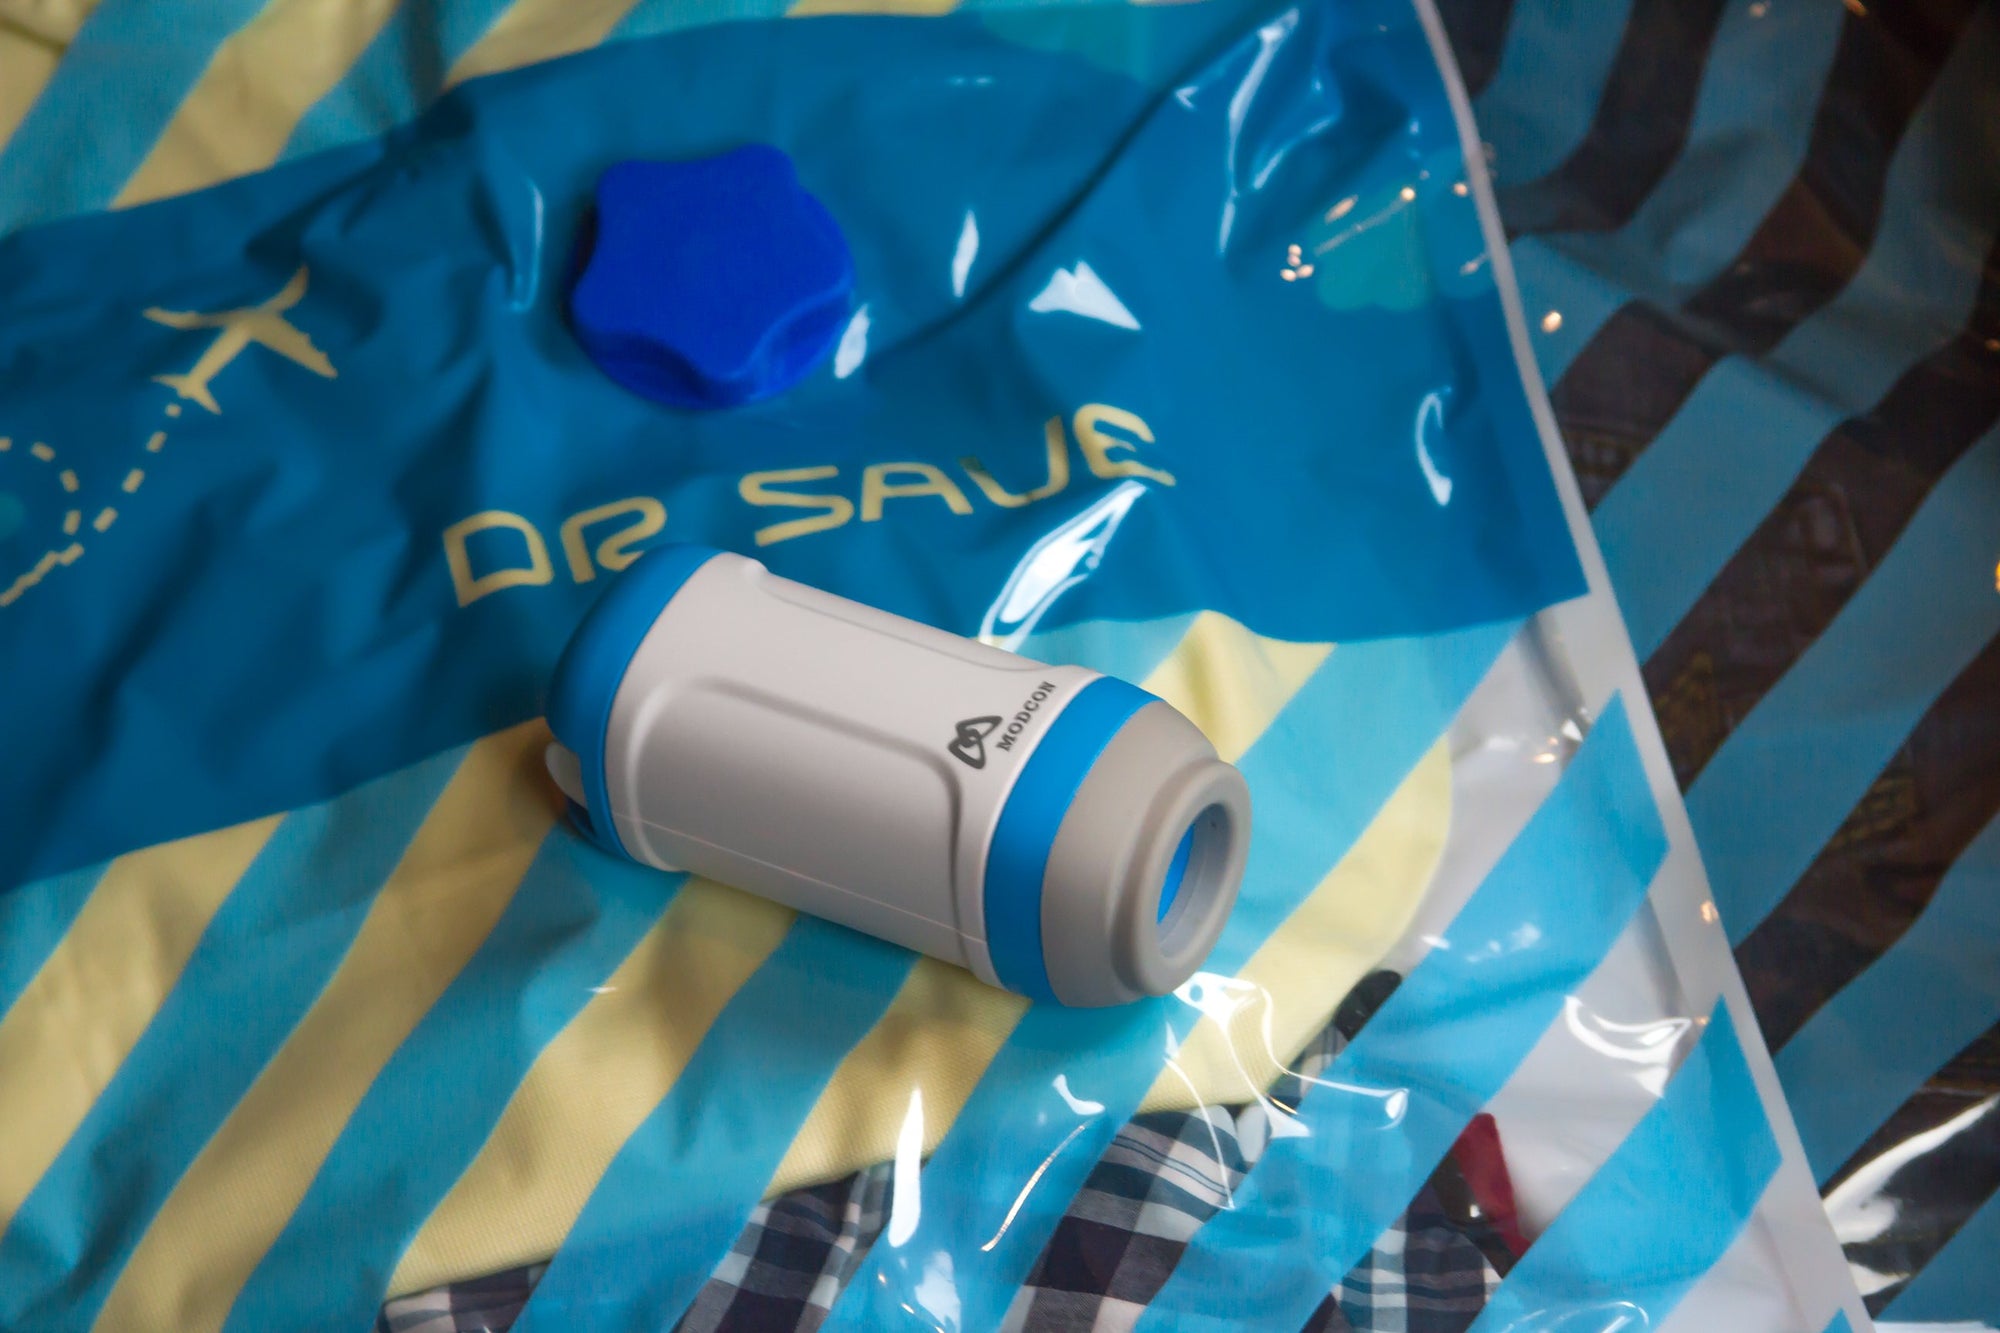 Do Vacuum Seal Bags really work? (Dr Save Vacuum Bag Review!) 